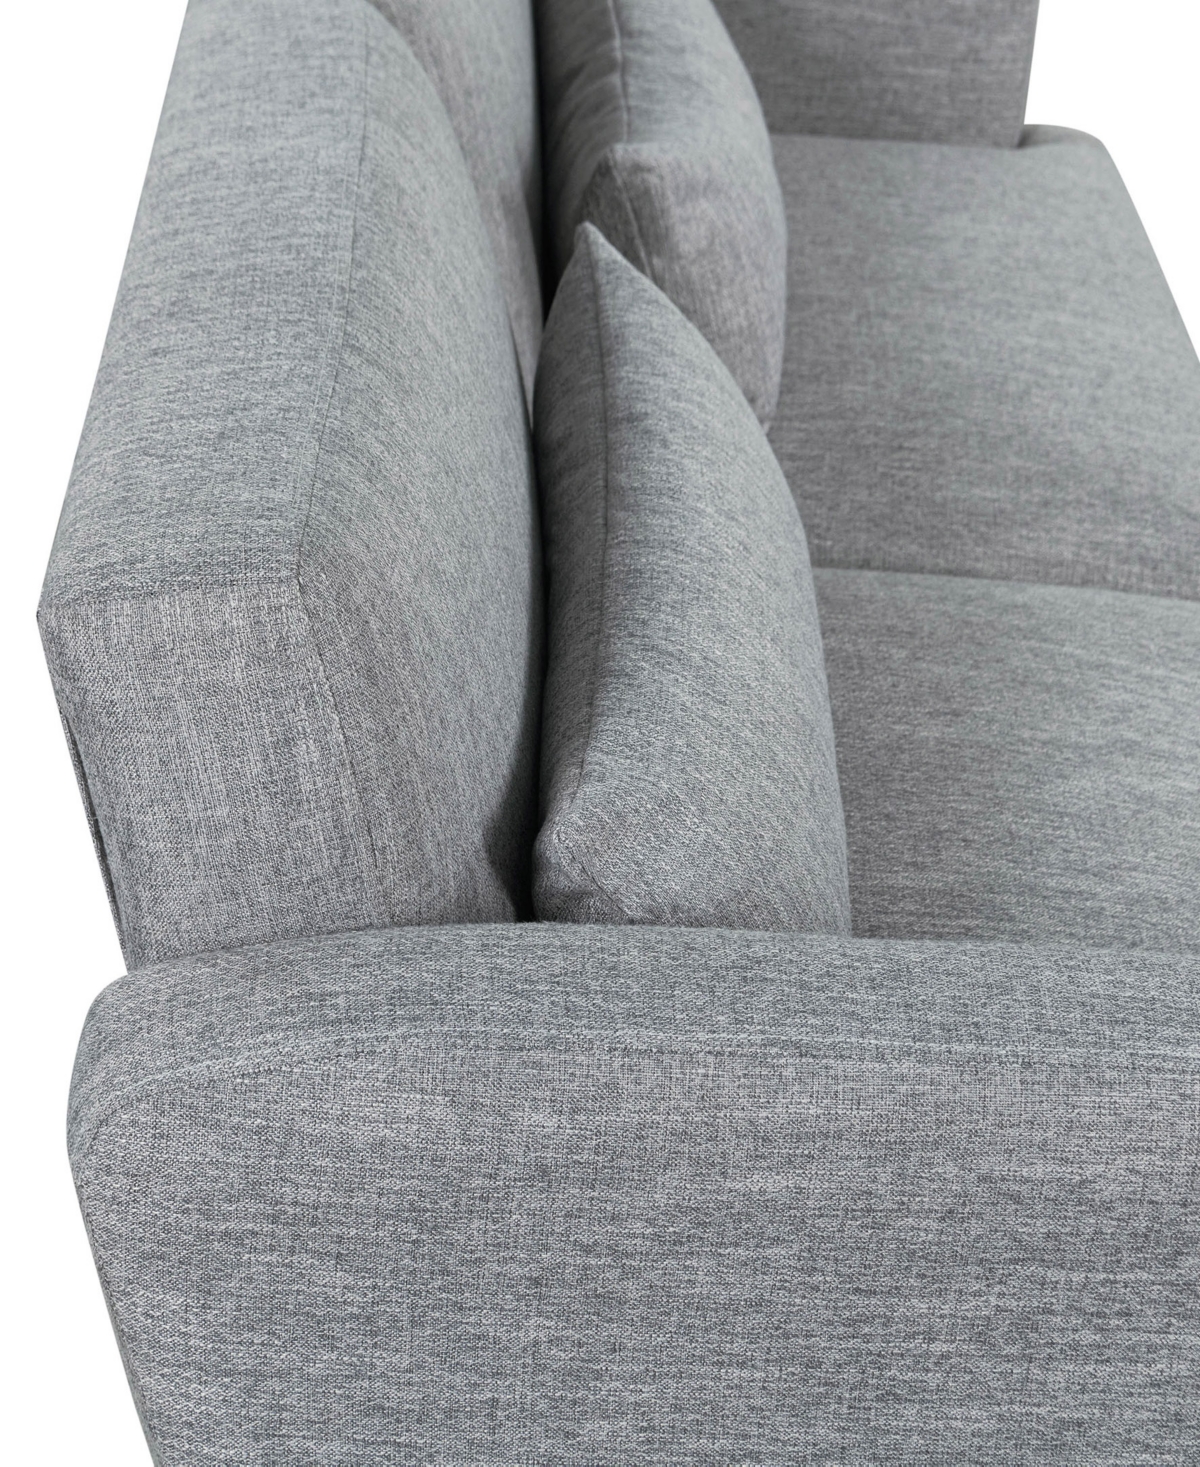 Shop Serta 79.9" W Polyester Price Convertible Sofa In Gray